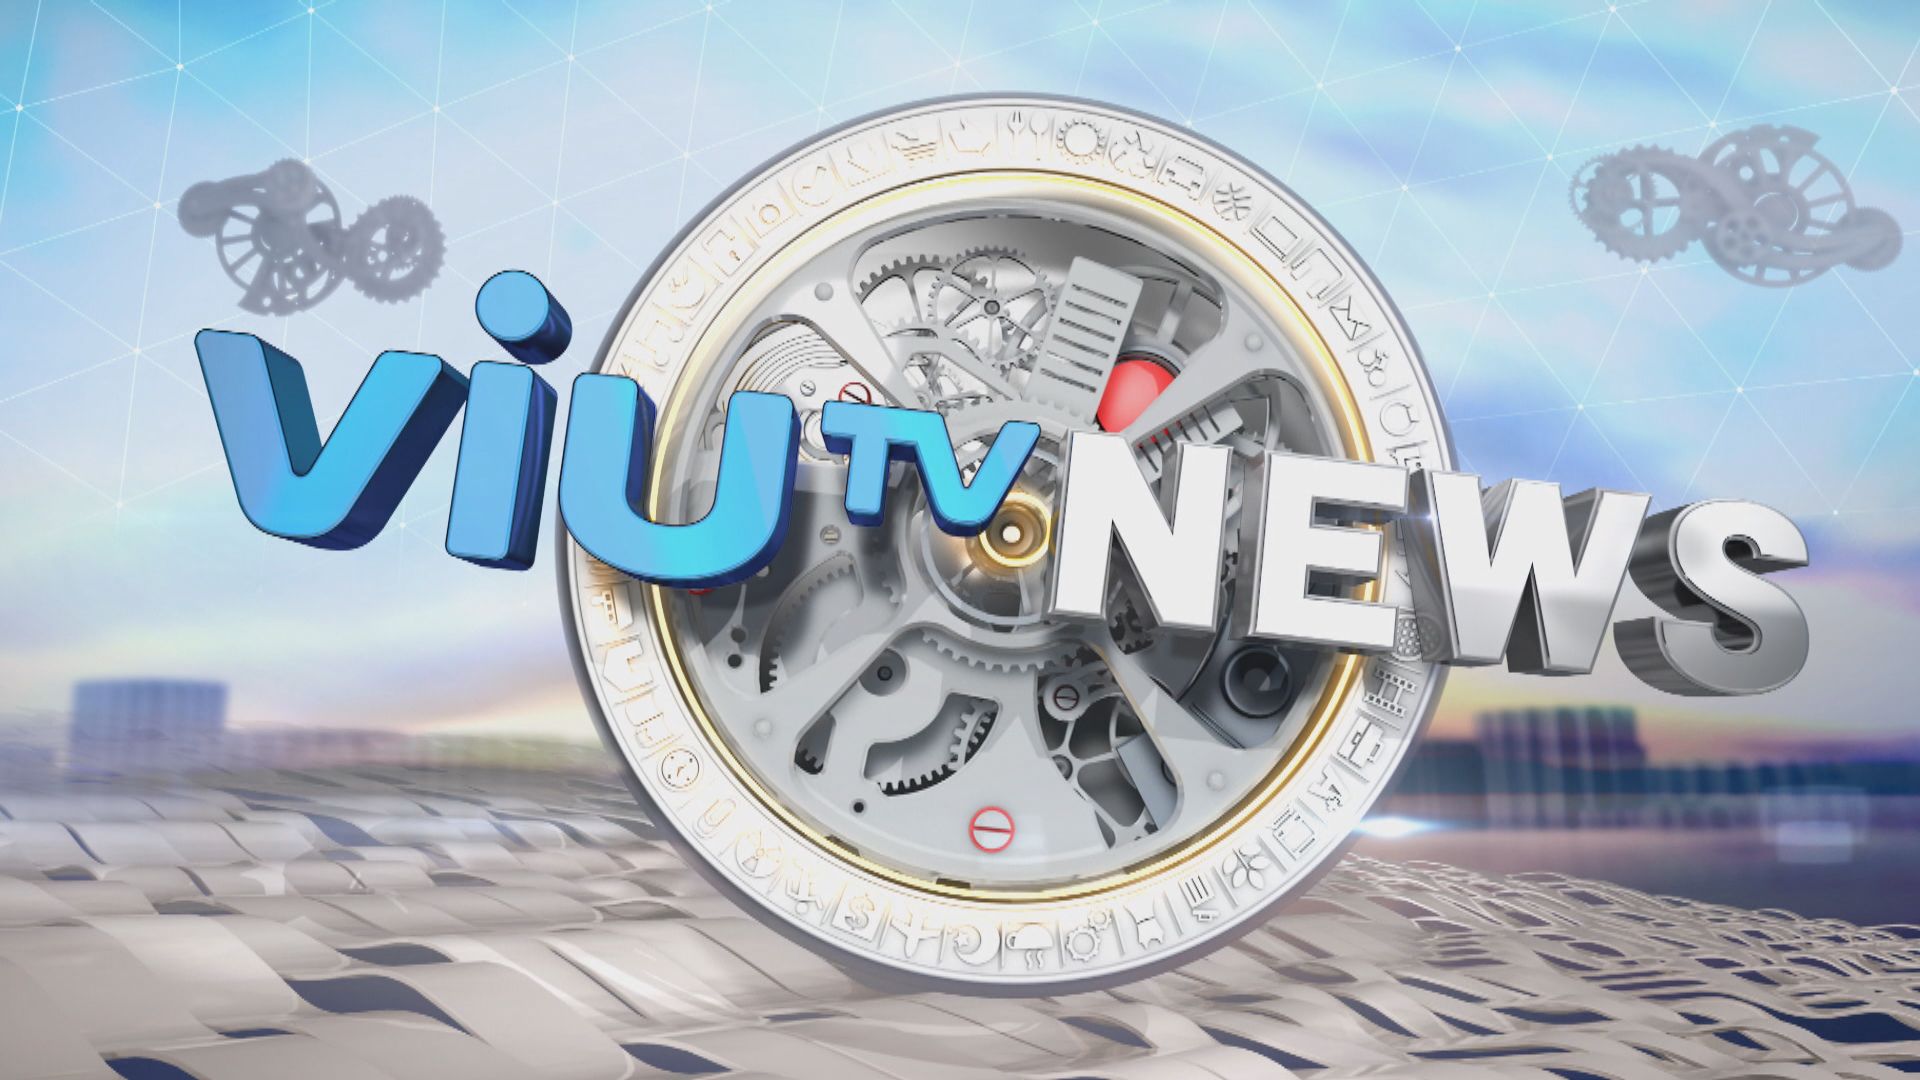 ViuTV News | News Bulletin at 11pm (15.12.2022)